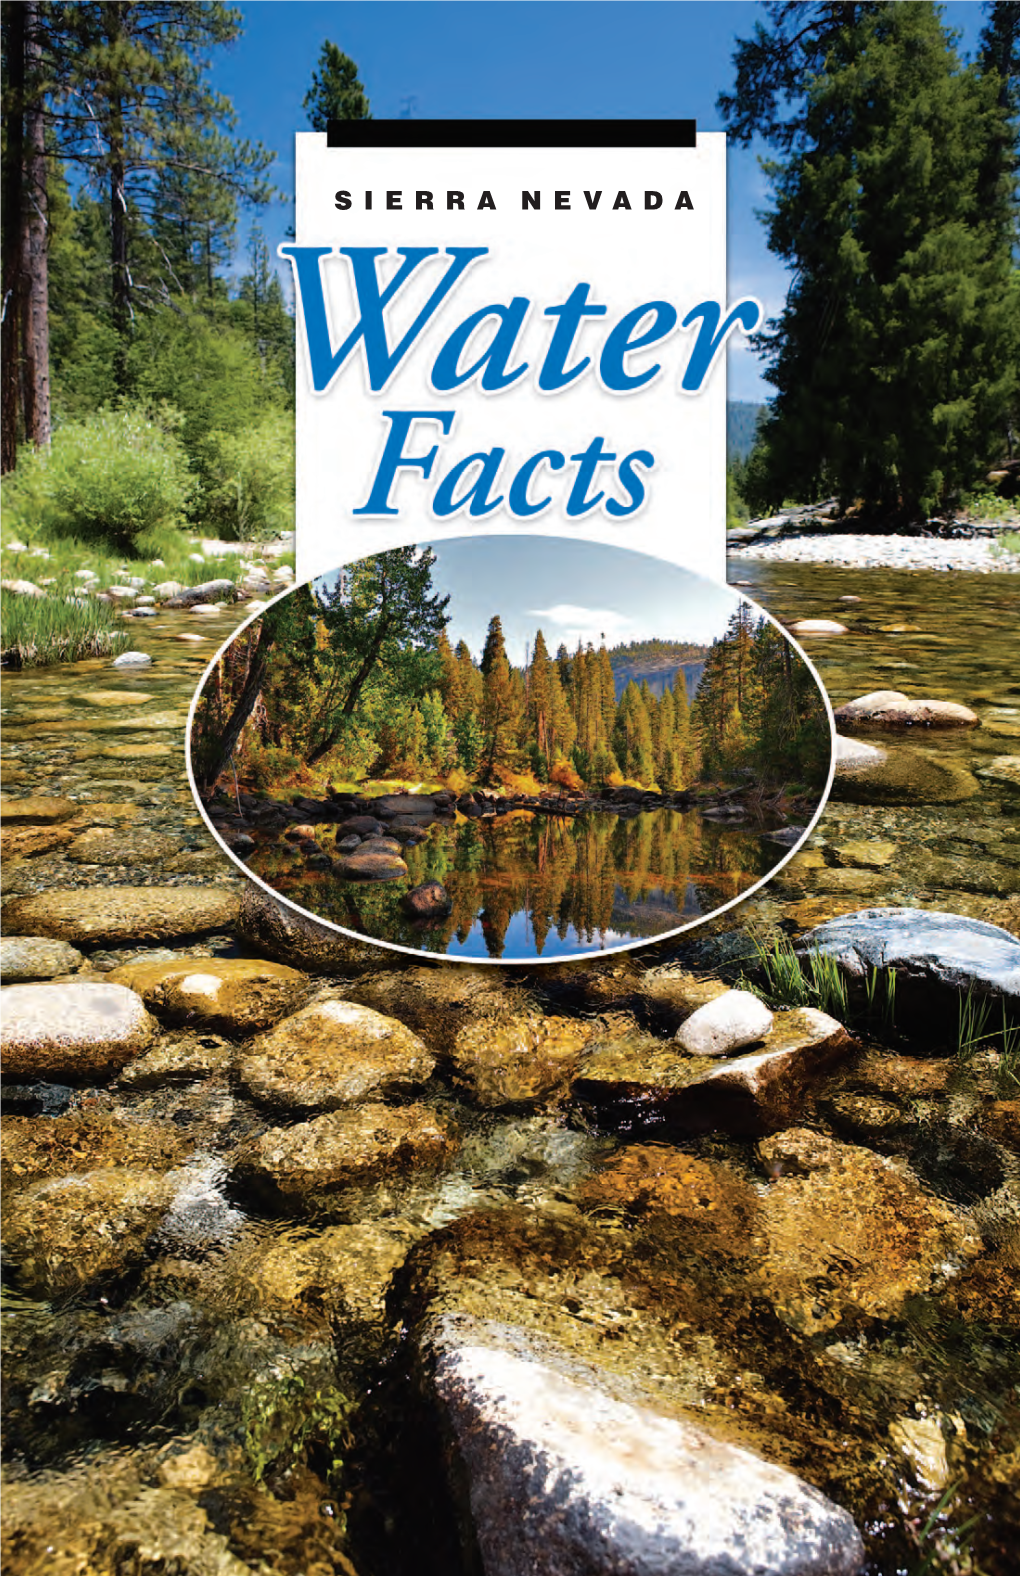 Sierra Nevada Water Facts